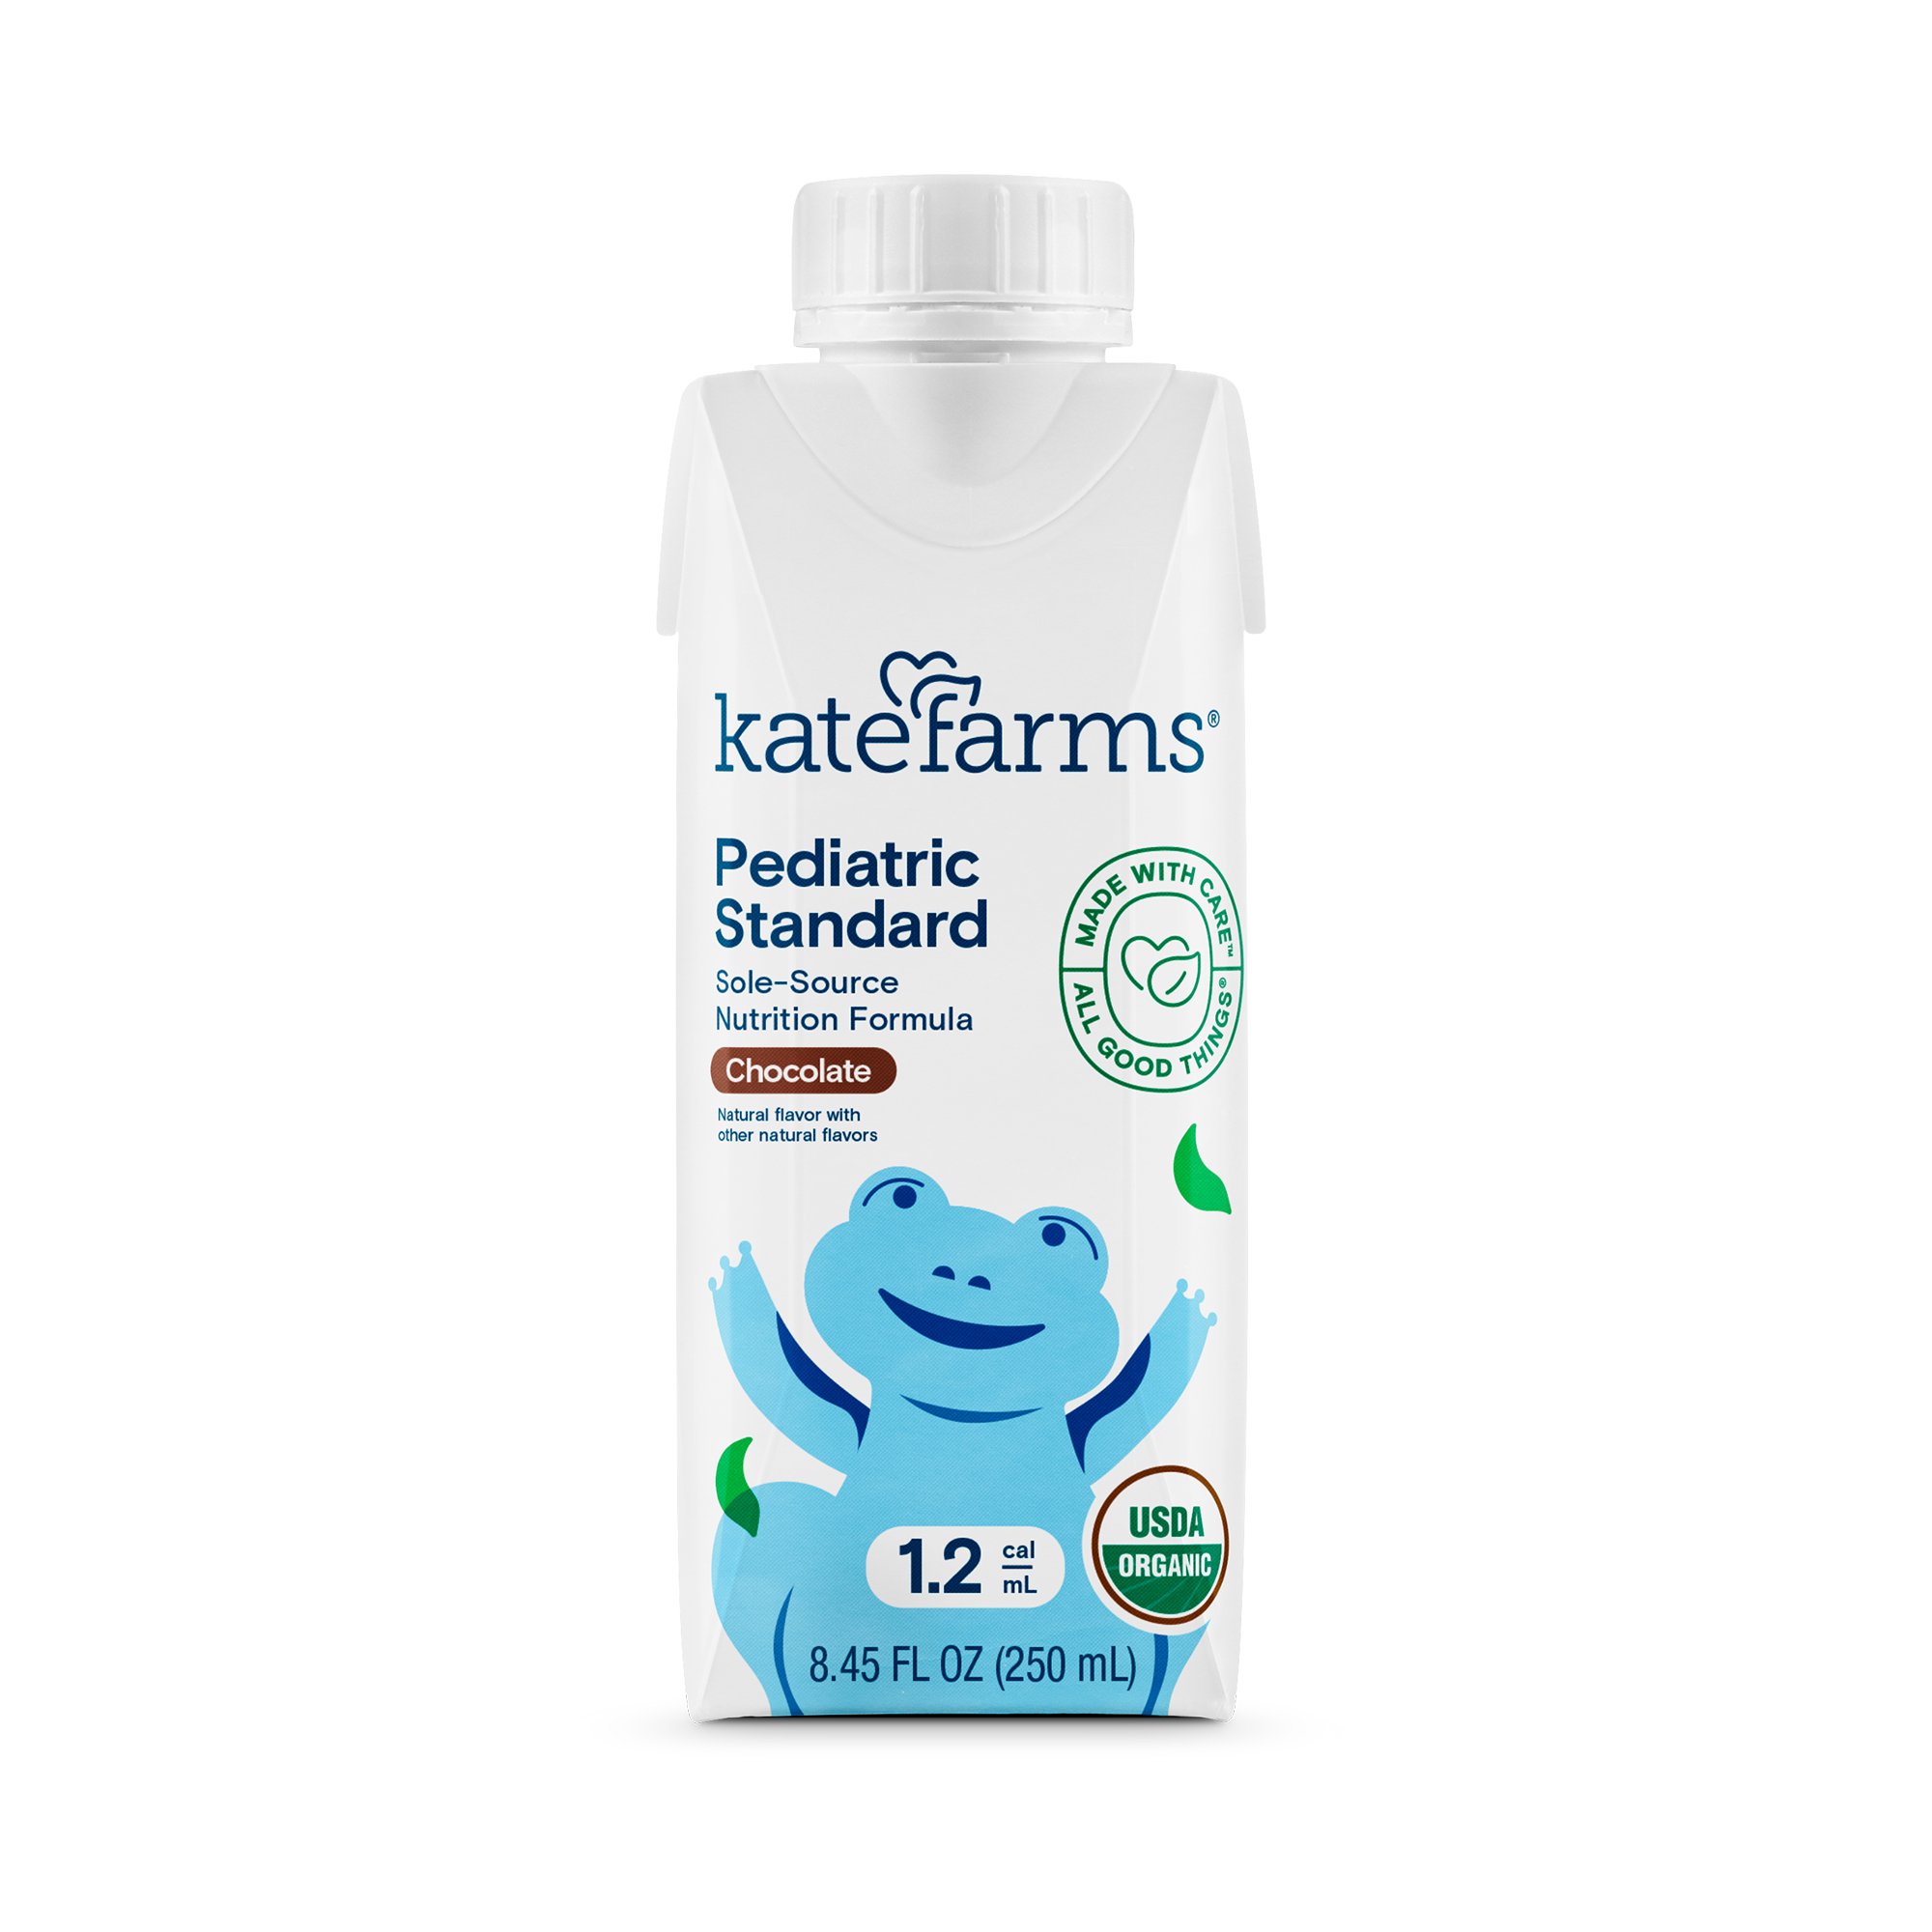 Kate Farms Pediatric Standard 1.2 Sole-Source Nutrition Formula, Chocolate Flavor, 8.45-ounce carton MK 1206262